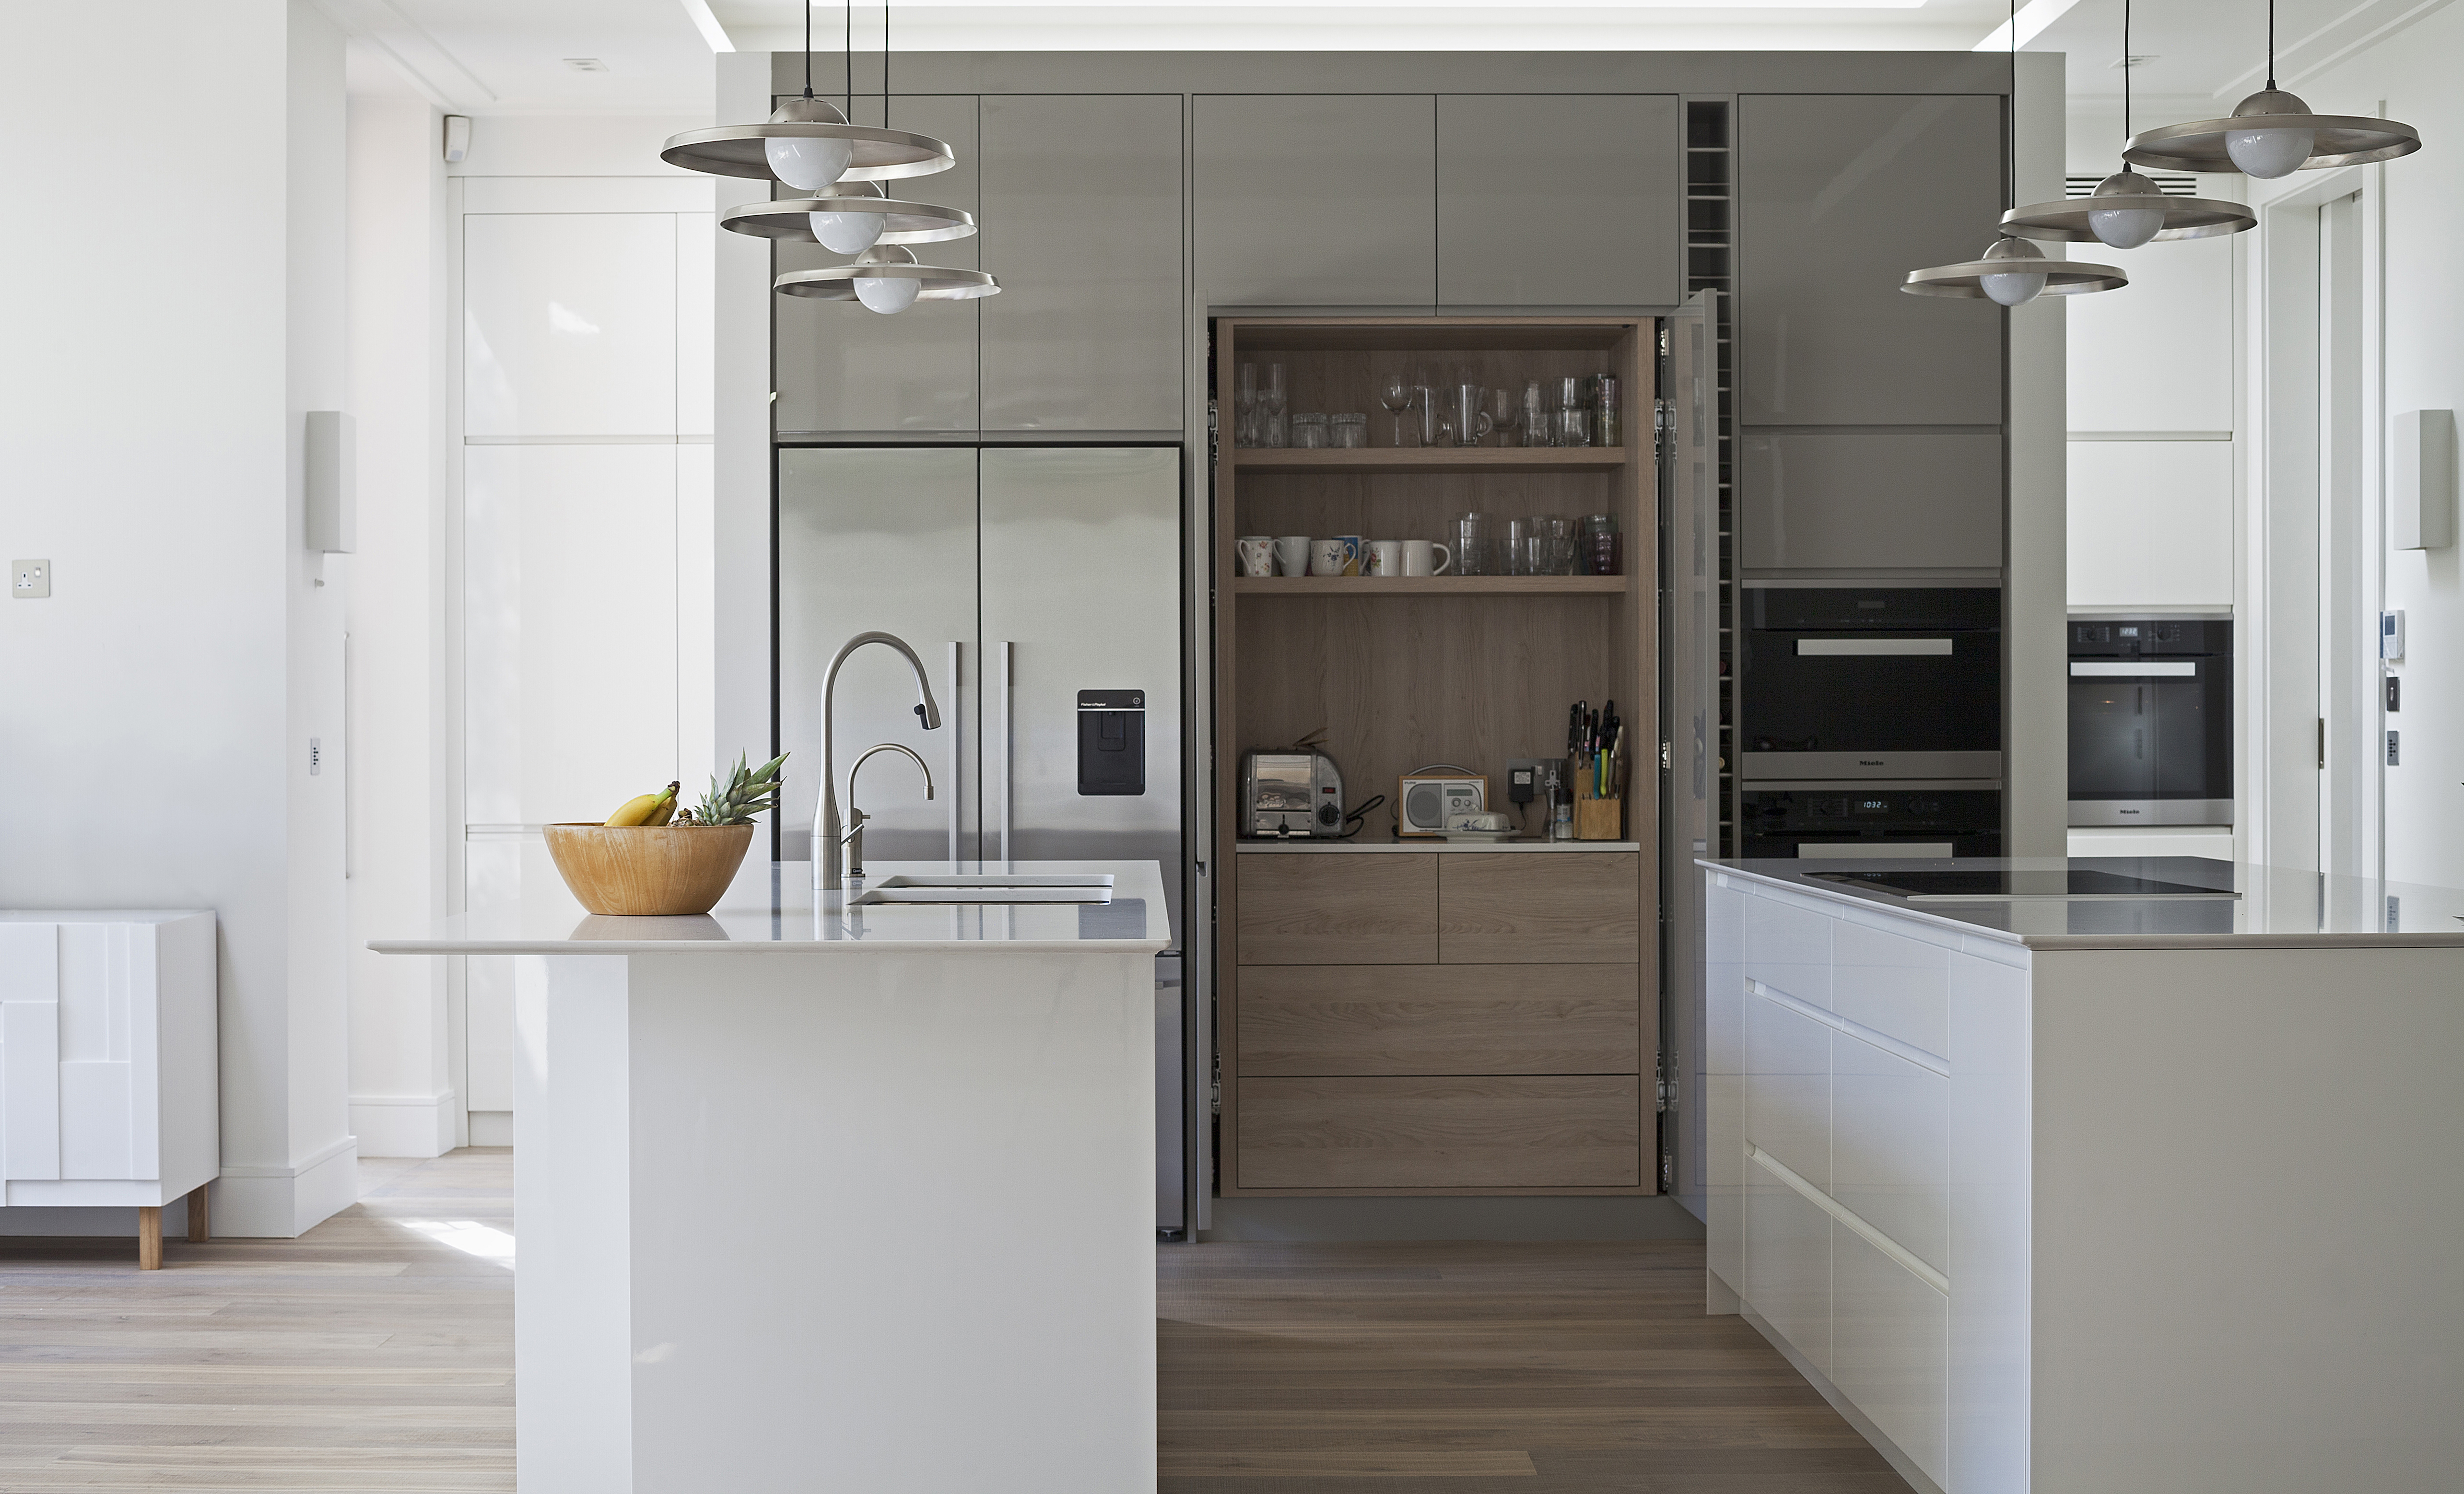 18 stunning kitchen cabinet ideas – clever and stylish kitchen ...